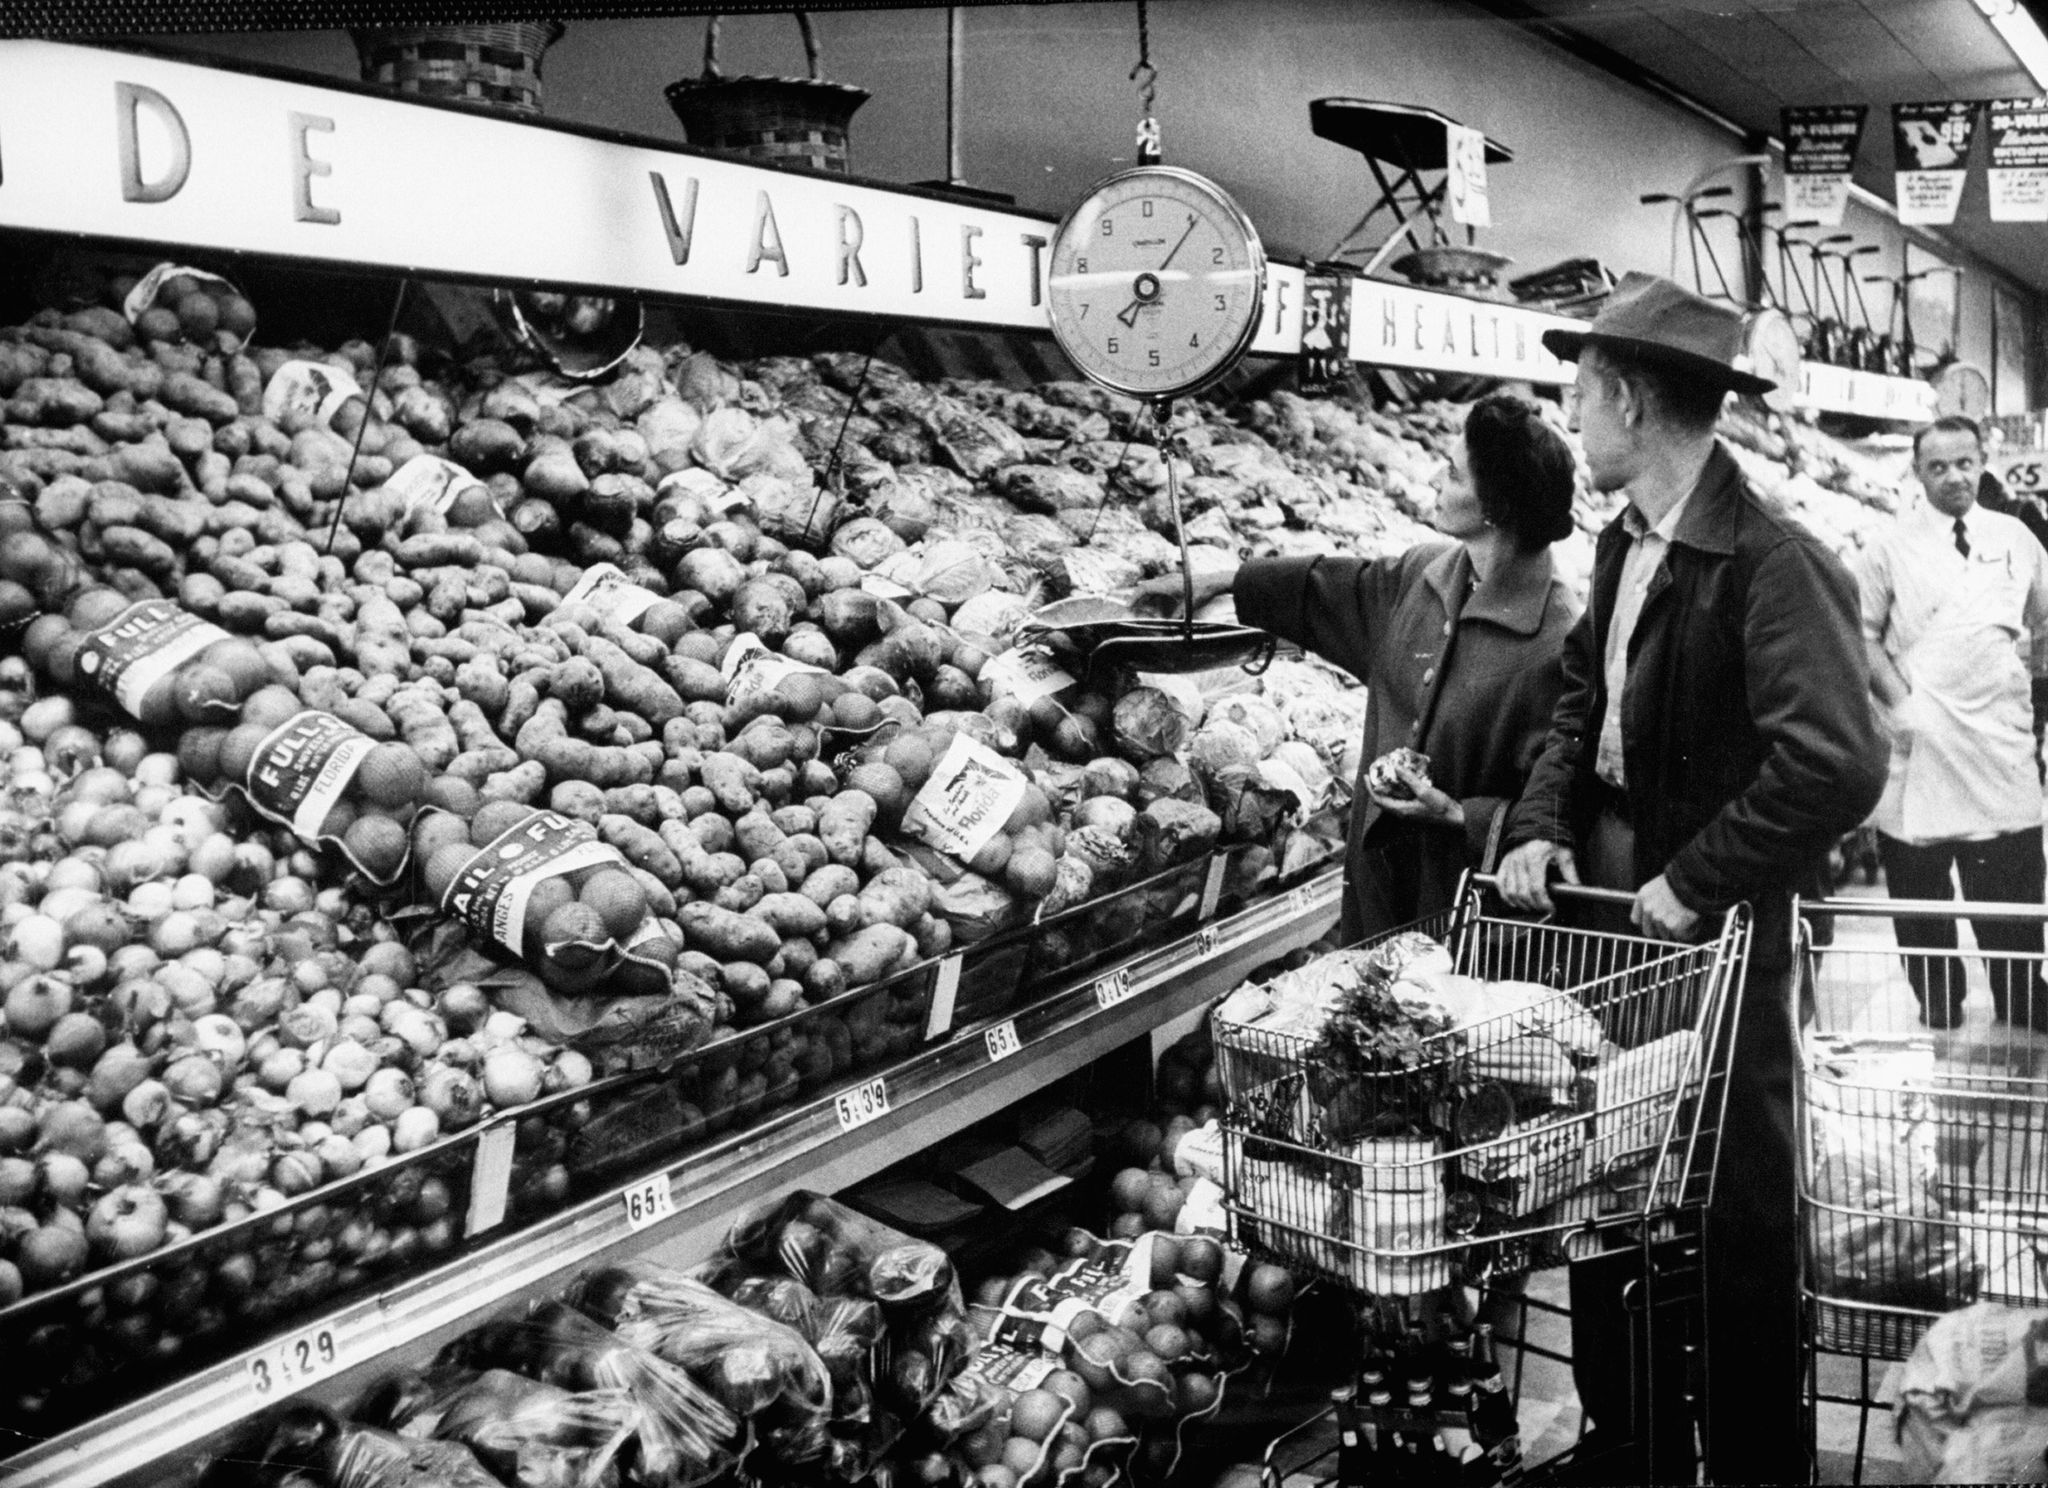 Carrito de supermercado - Wikipedia, la enciclopedia libre